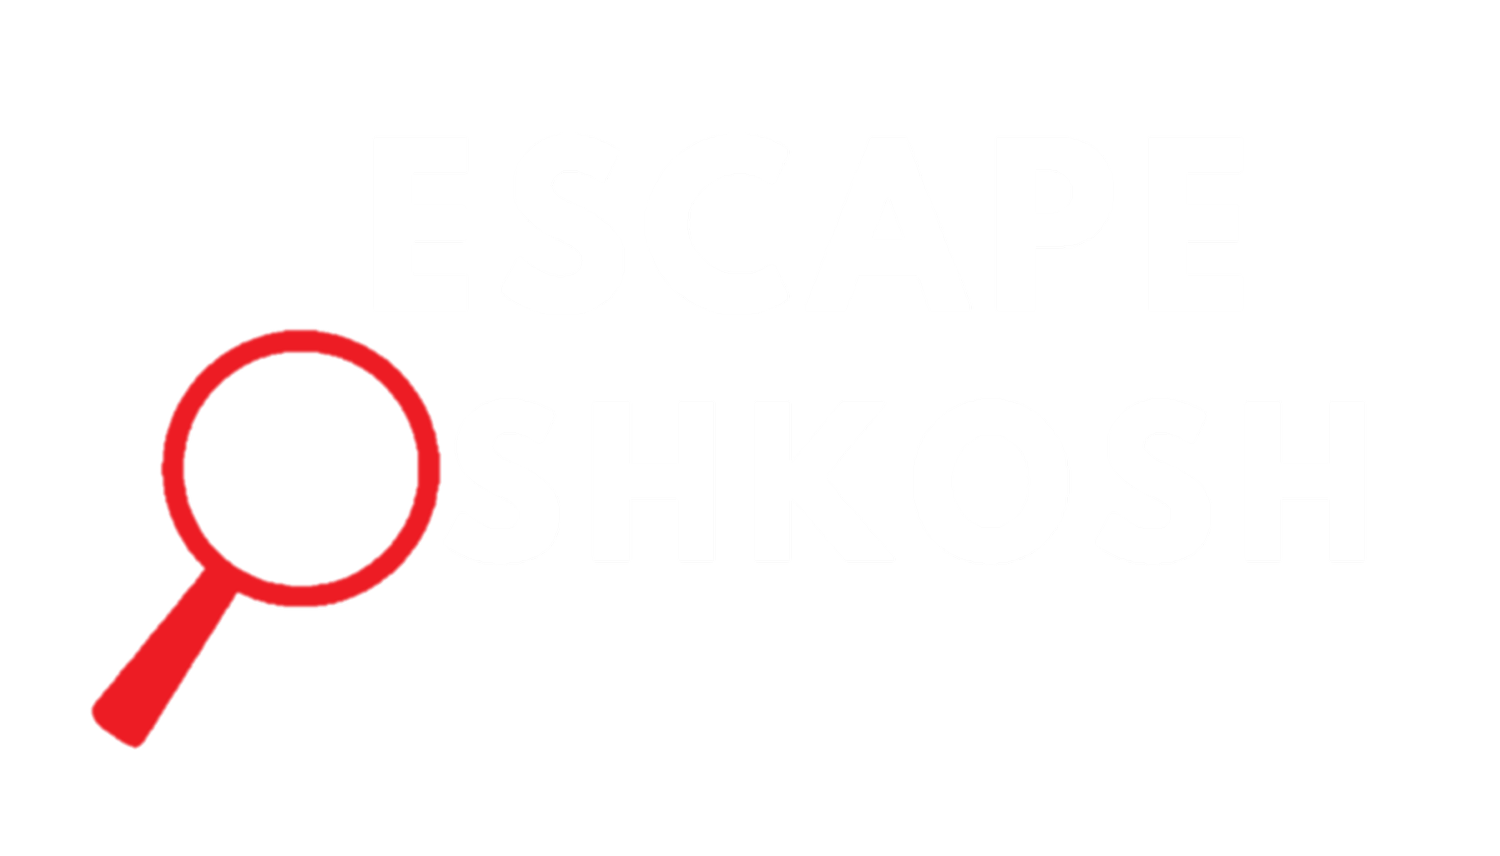 Escape Oshkosh